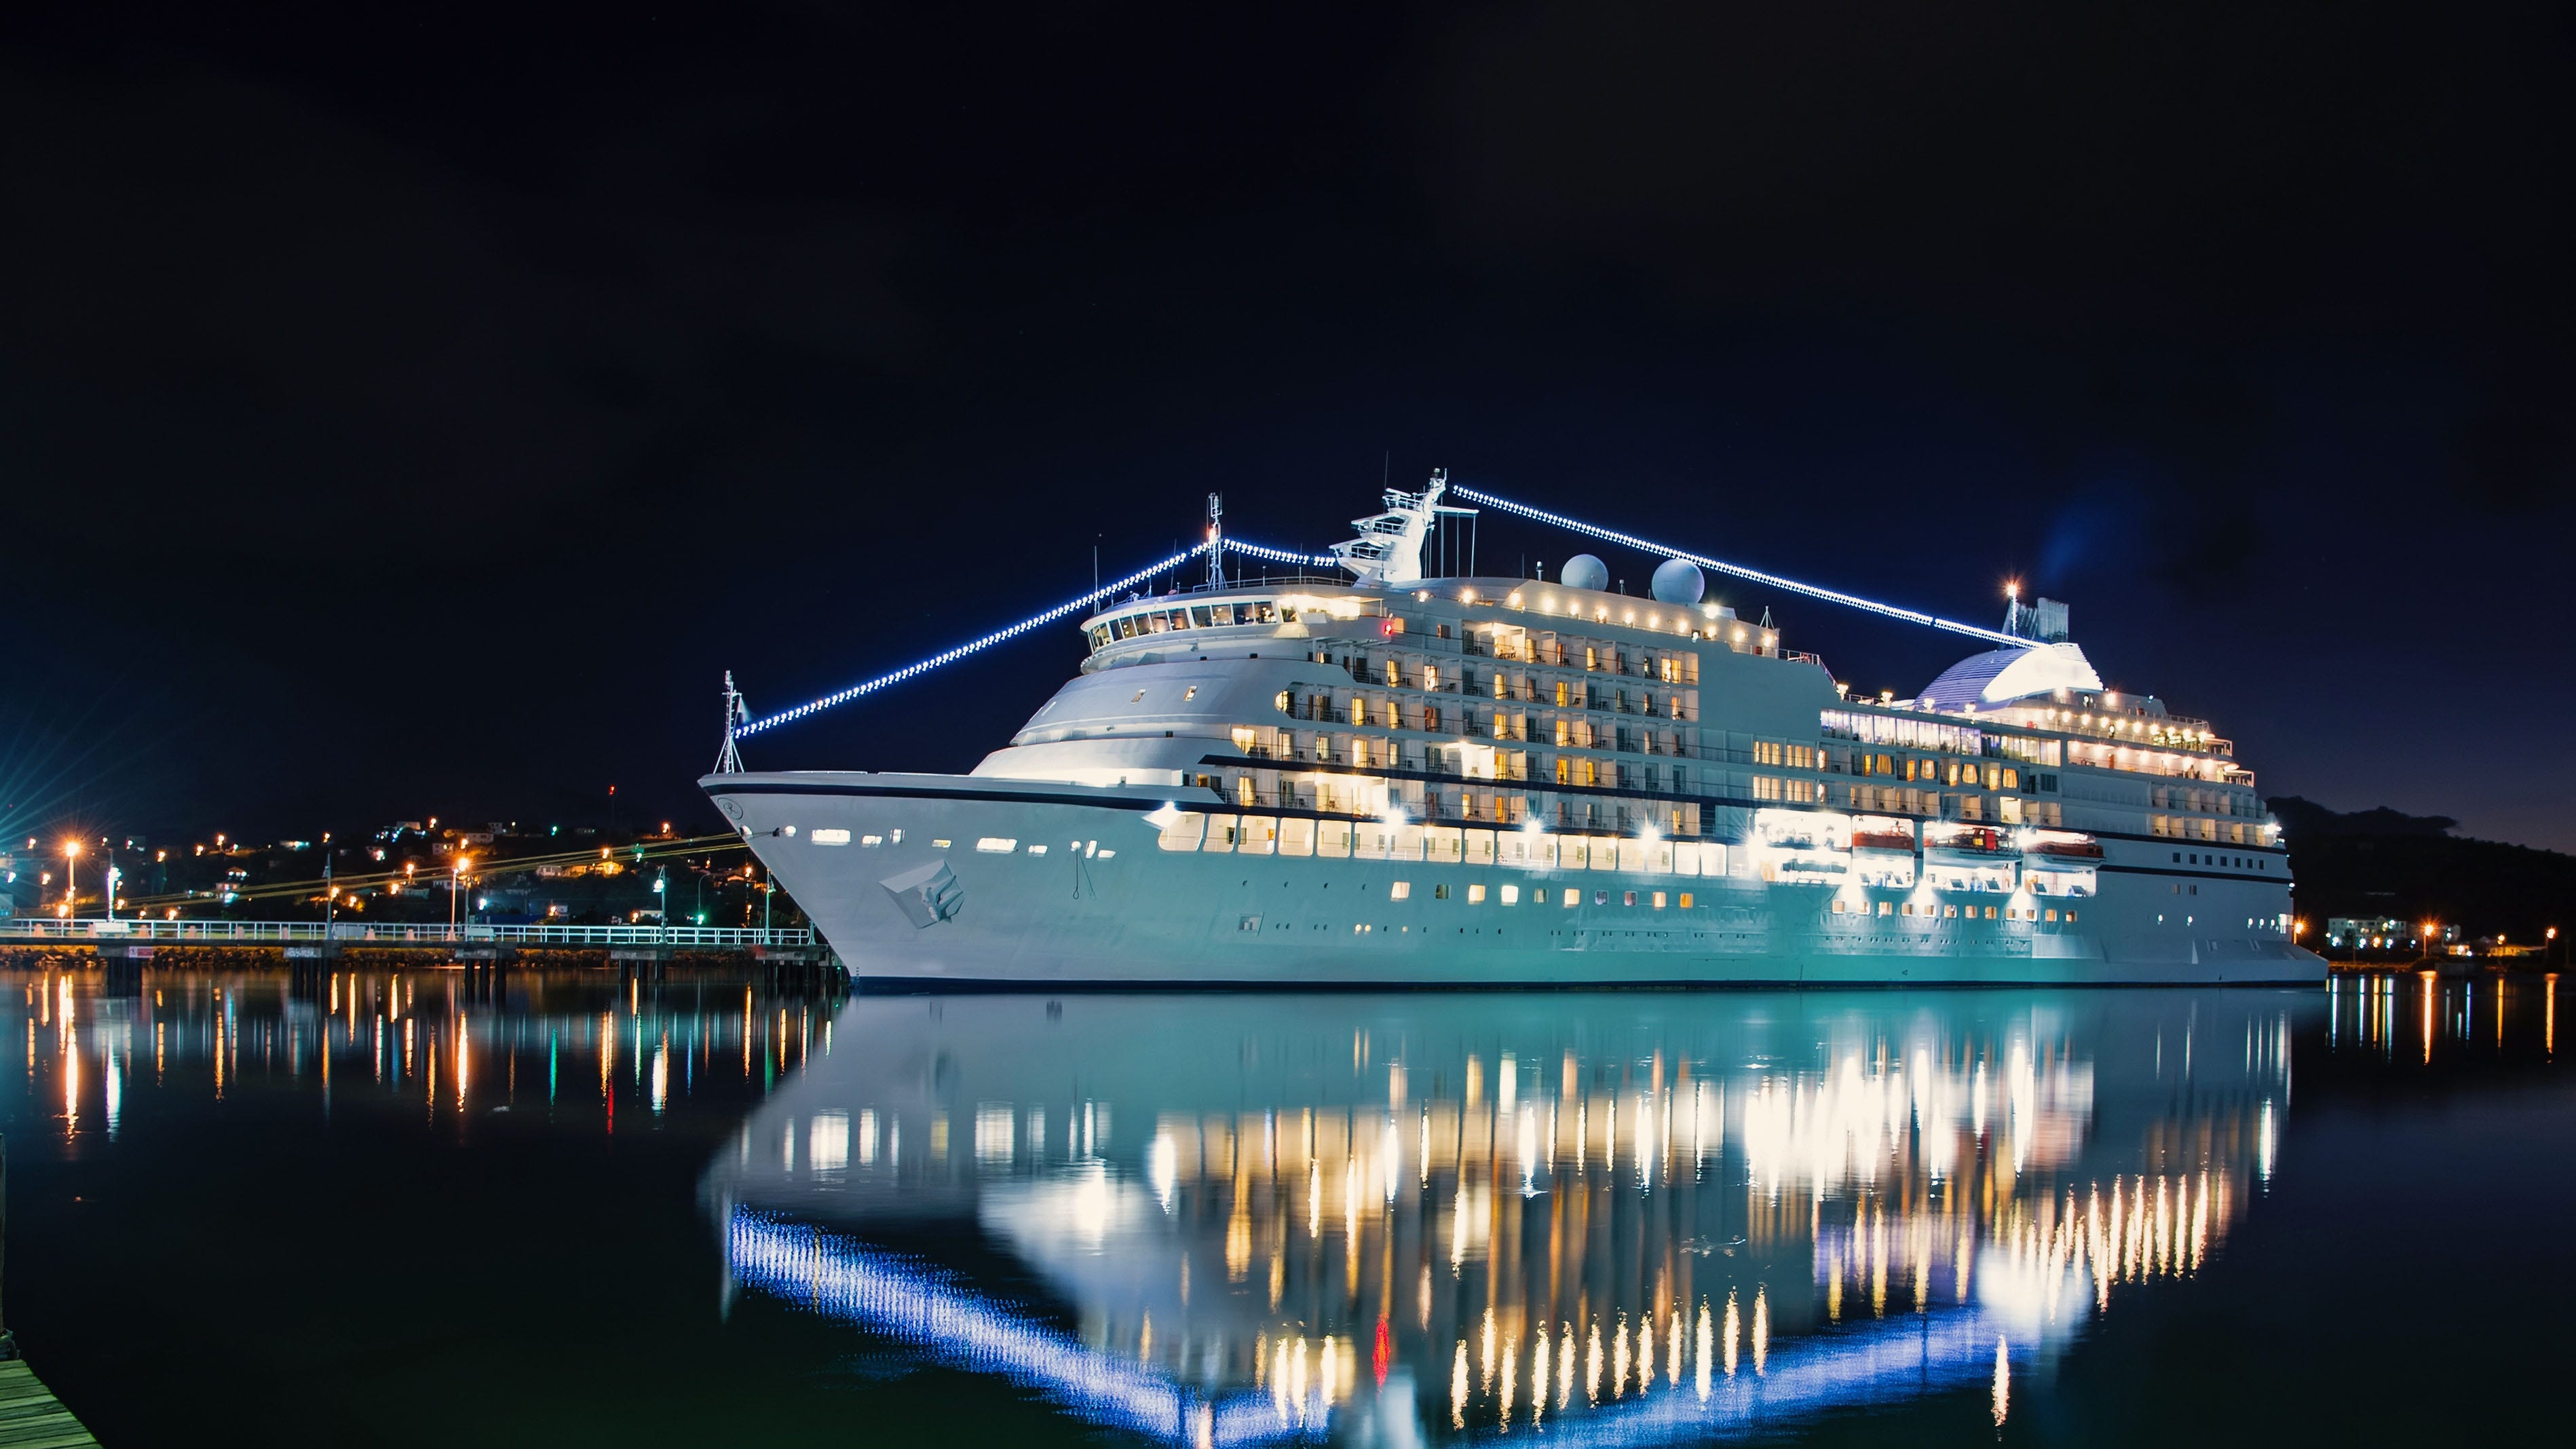 regent seven seas cruises marketing manager